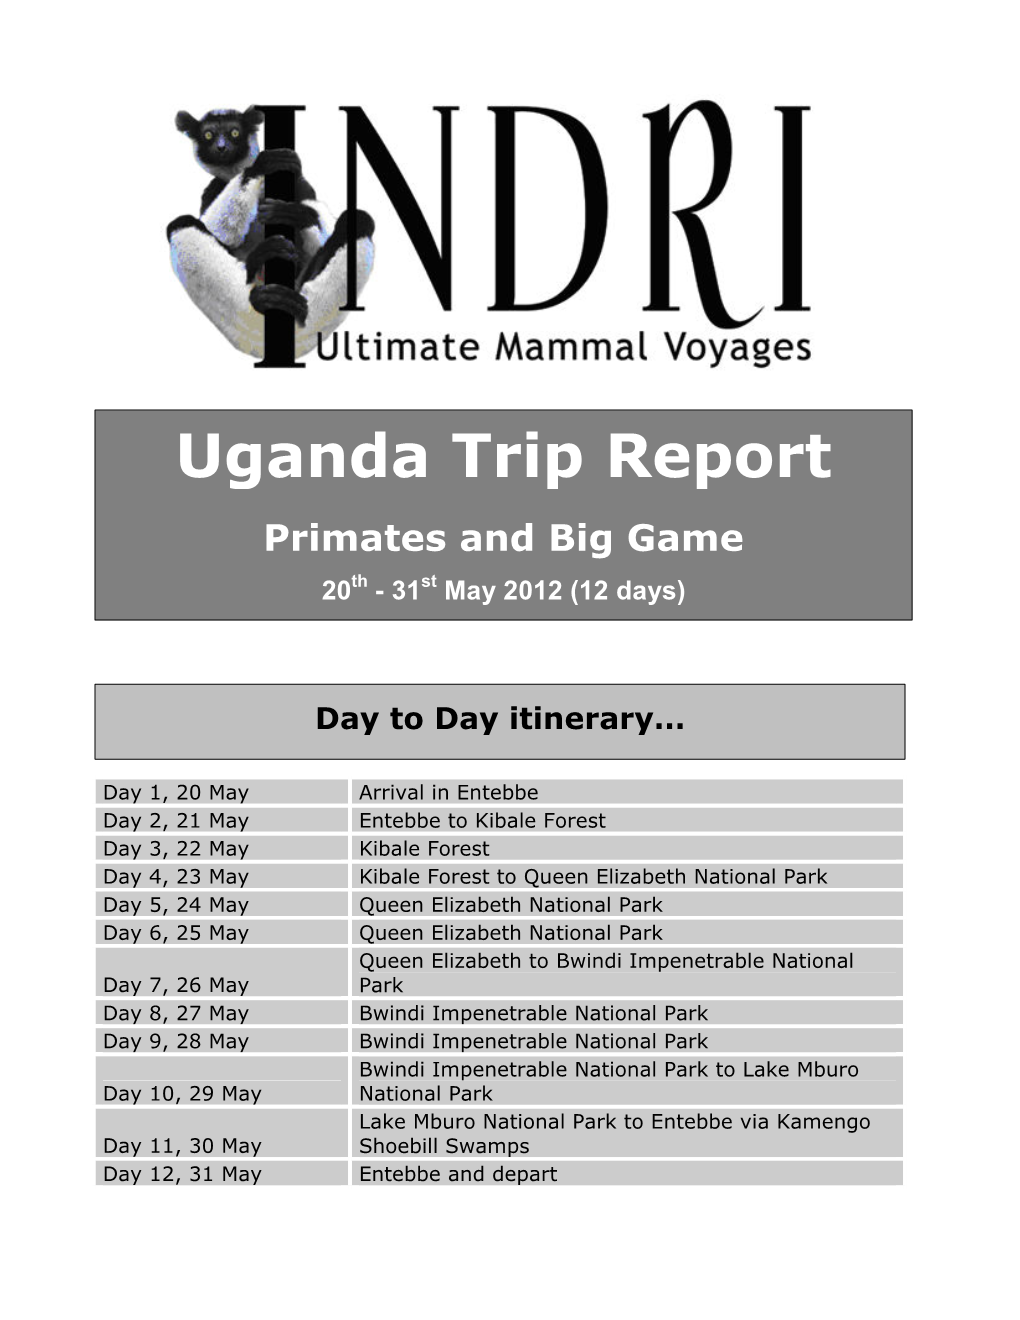 Uganda Trip Report 2 to 15 May 2012 Primates and Big Game